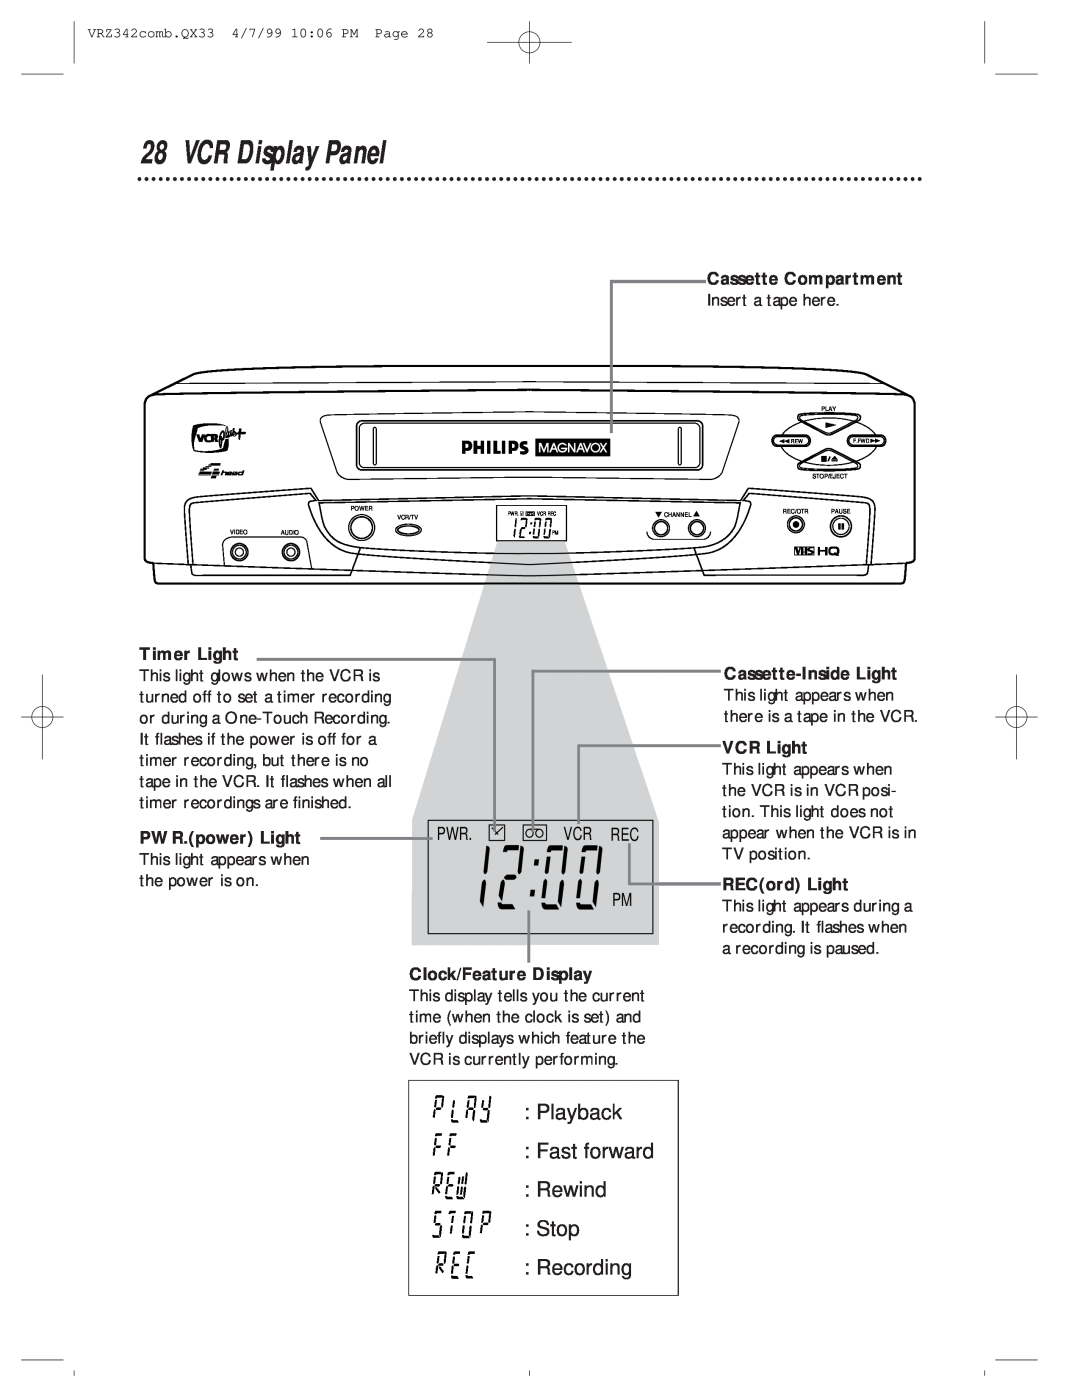 Magnavox VRZ342AT99 owner manual VCR Display Panel, Playback Fast forward Rewind Stop Recording, Vcr Rec Pm 